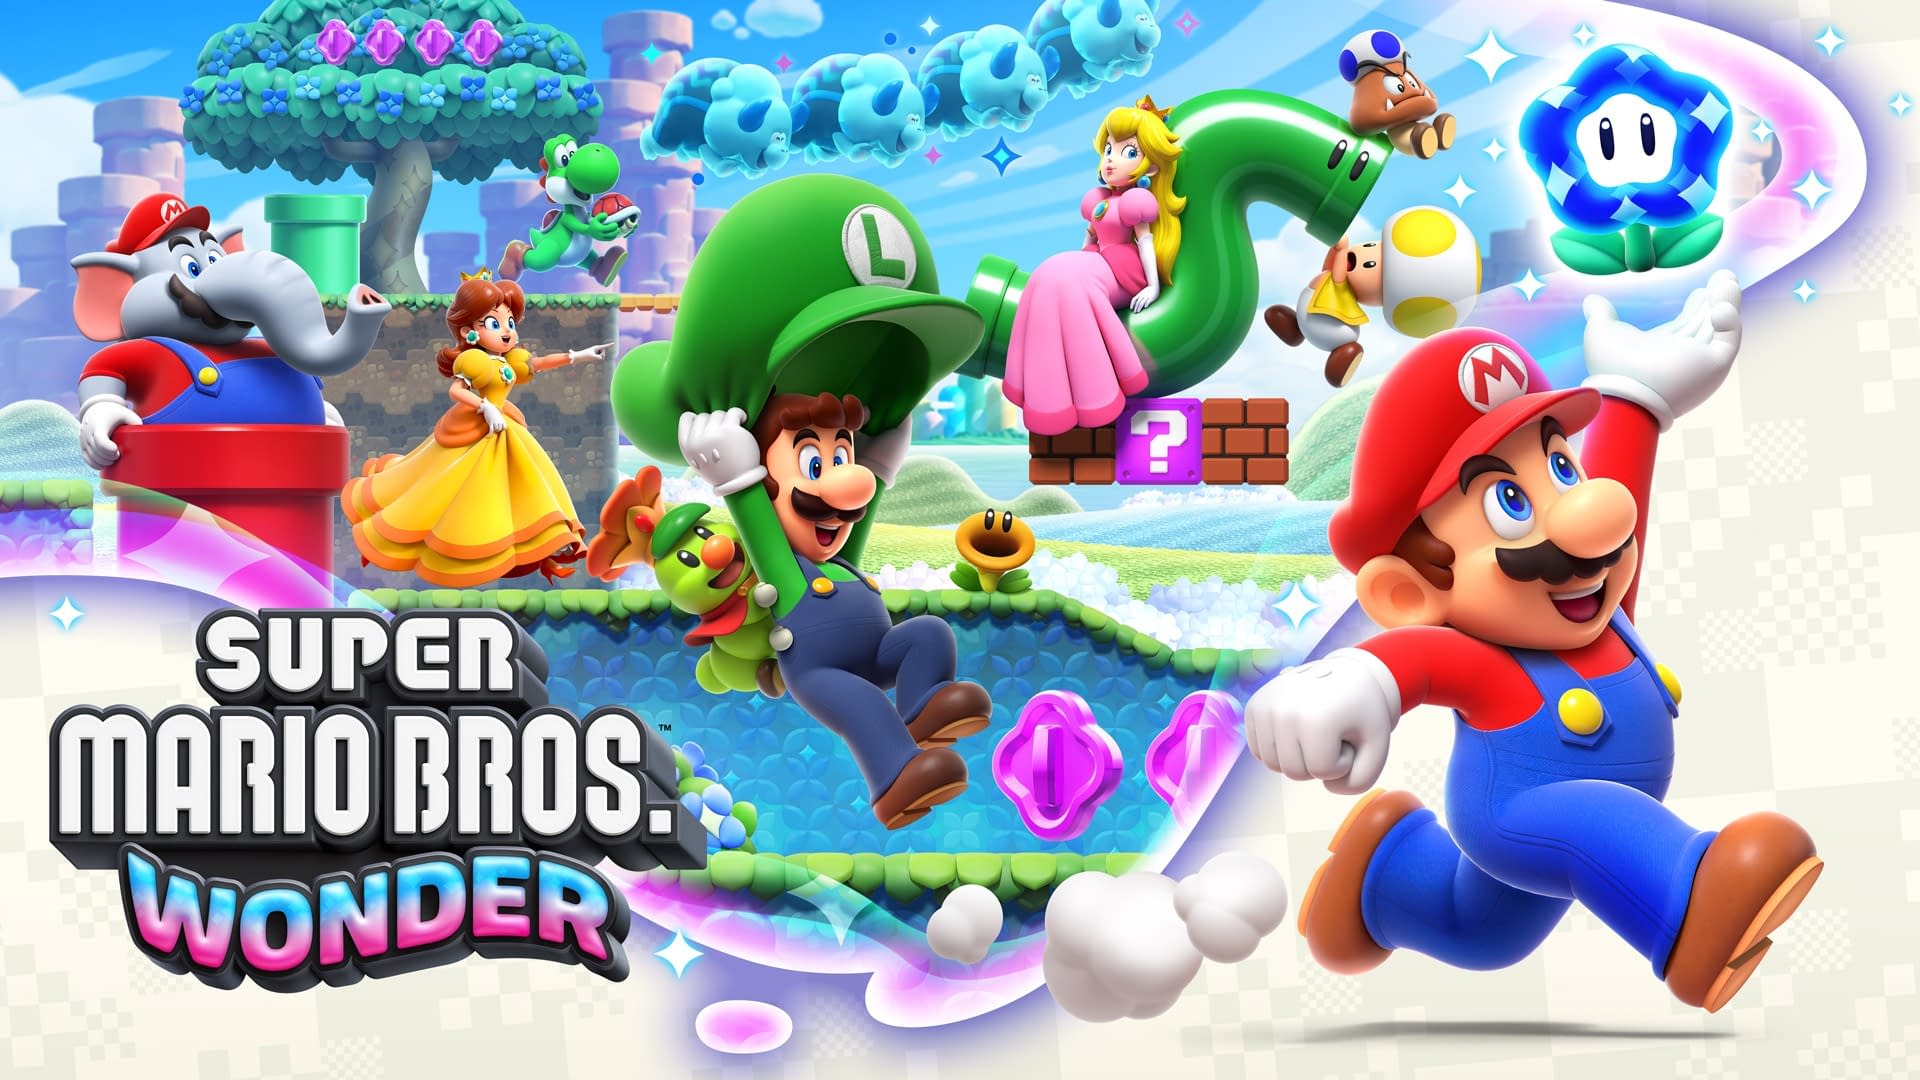 Legendary Mario Character Returns: Super Mario Bros. Wonder Announced